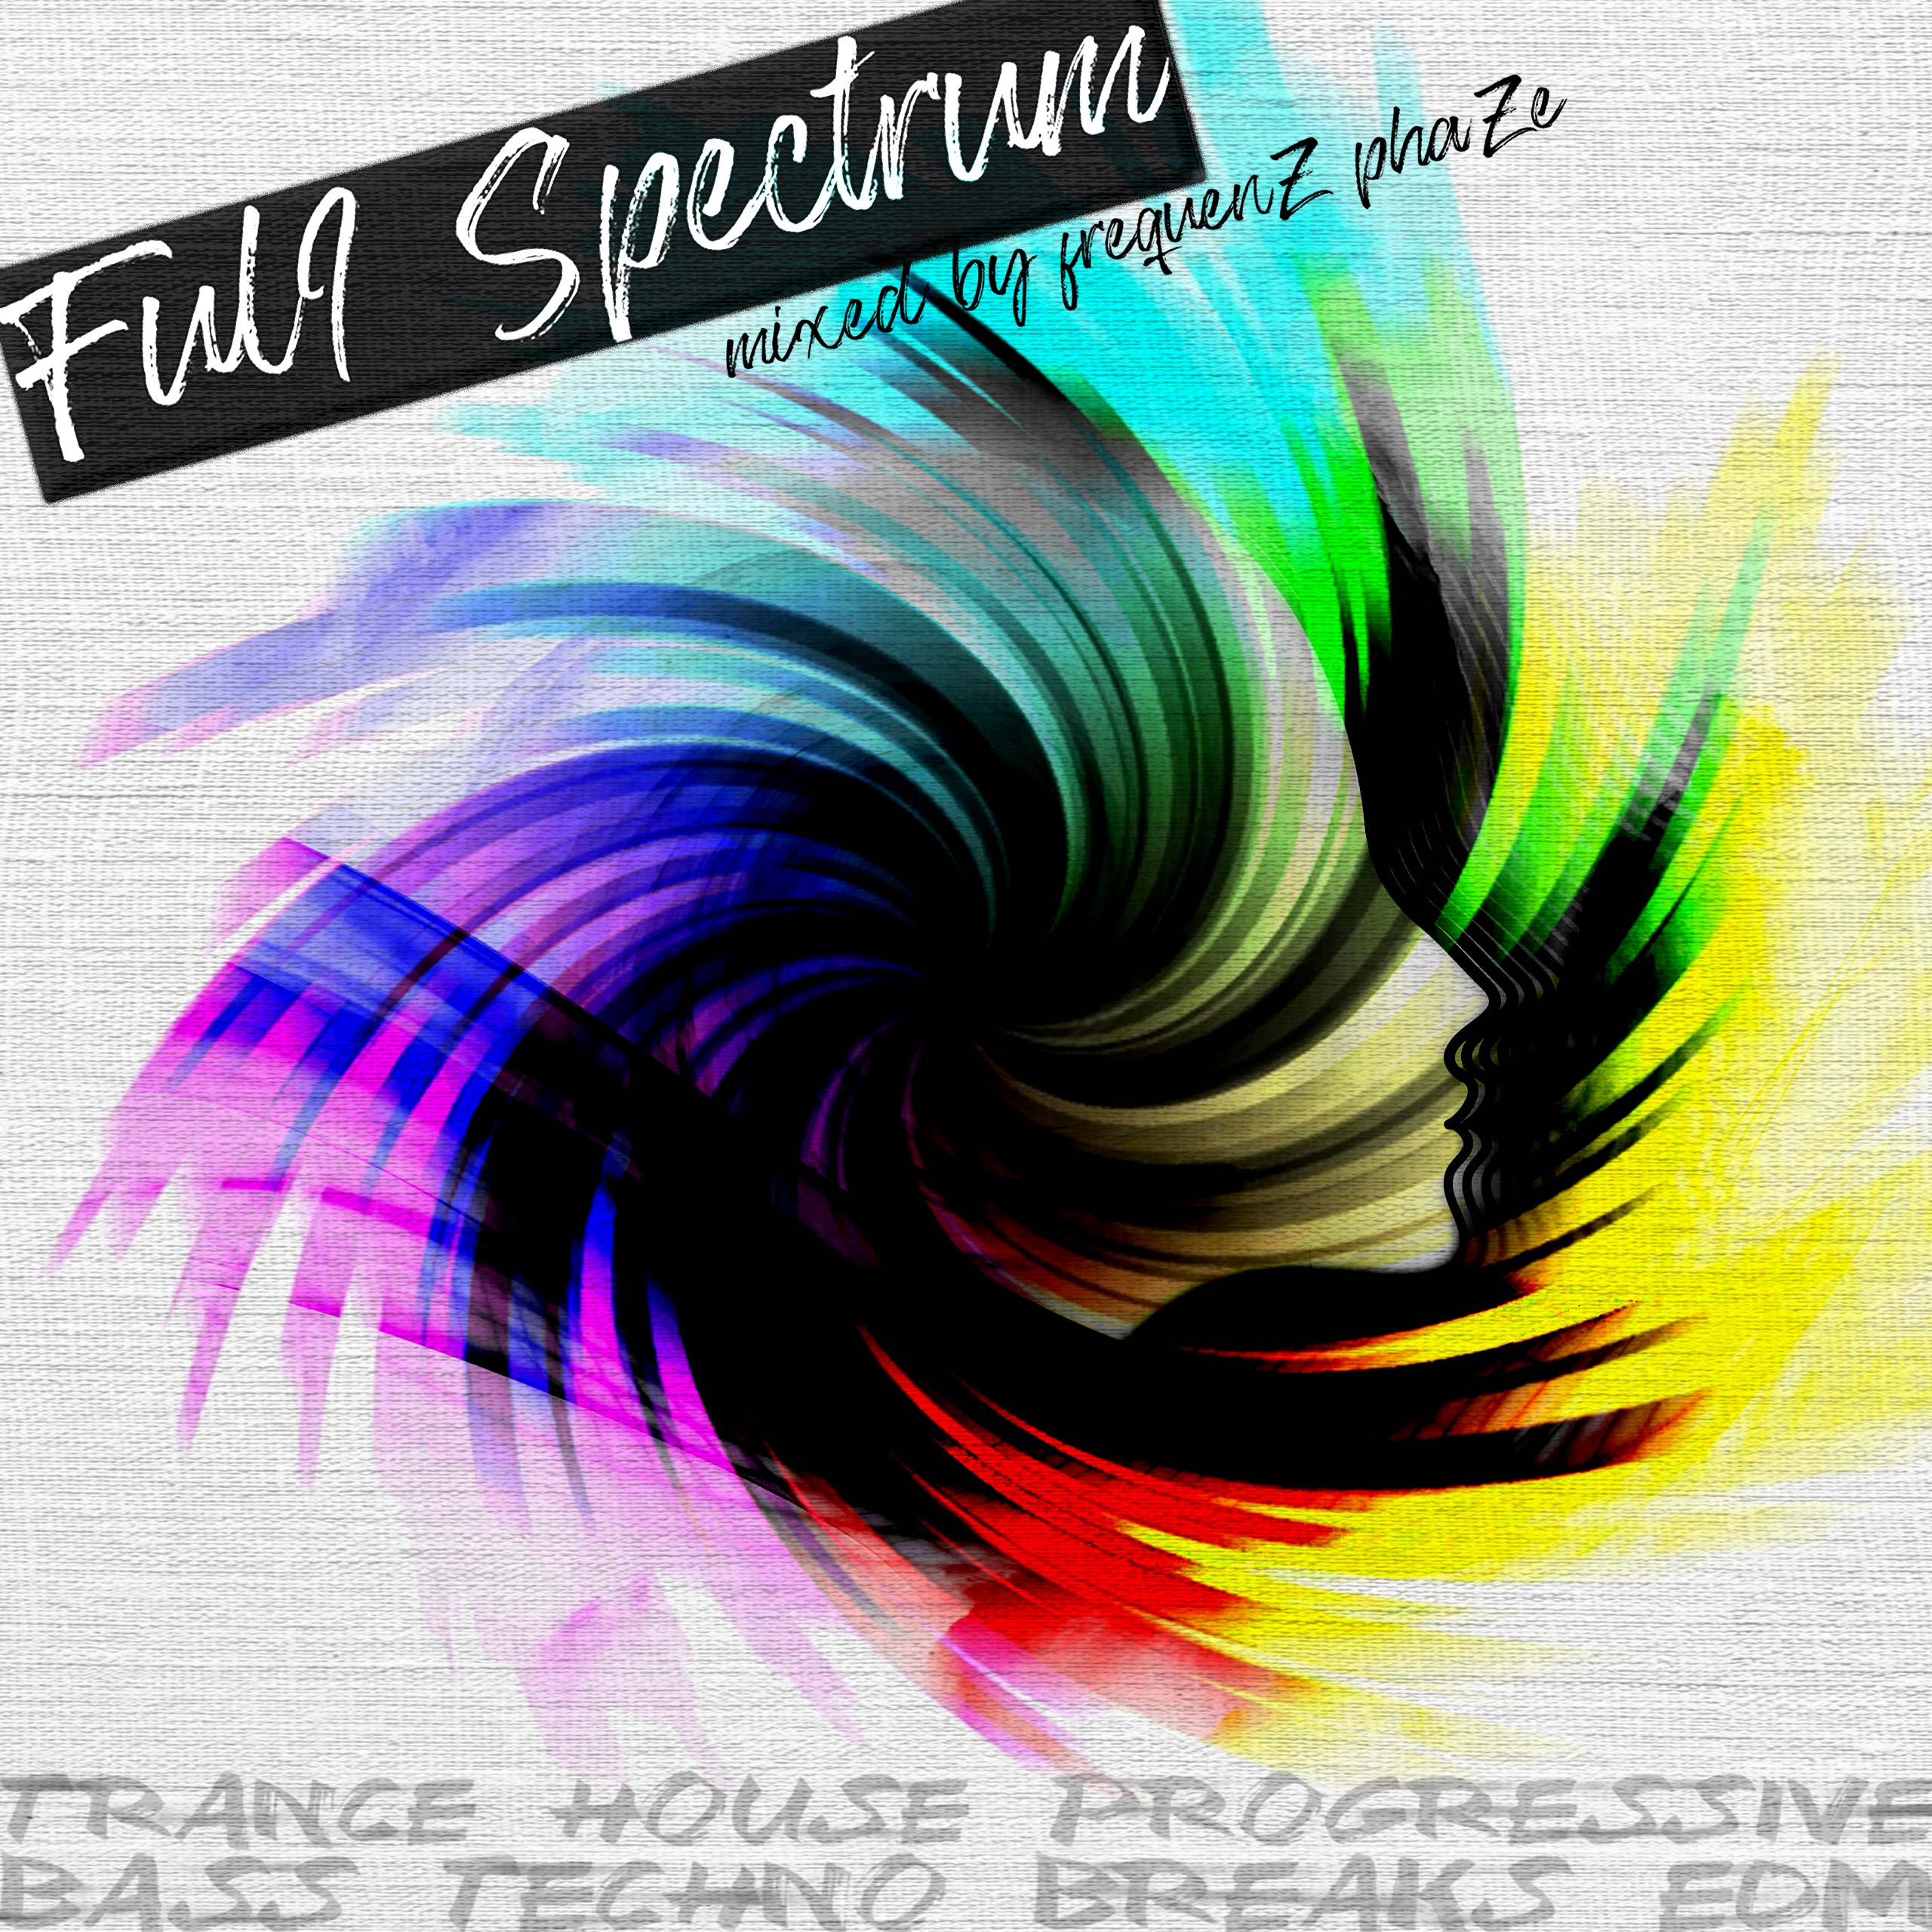 Full Spectrum - Trance, Psytrance, Progressive, Breaks, Bass, EDM - Mixed by frequenZ phaZe